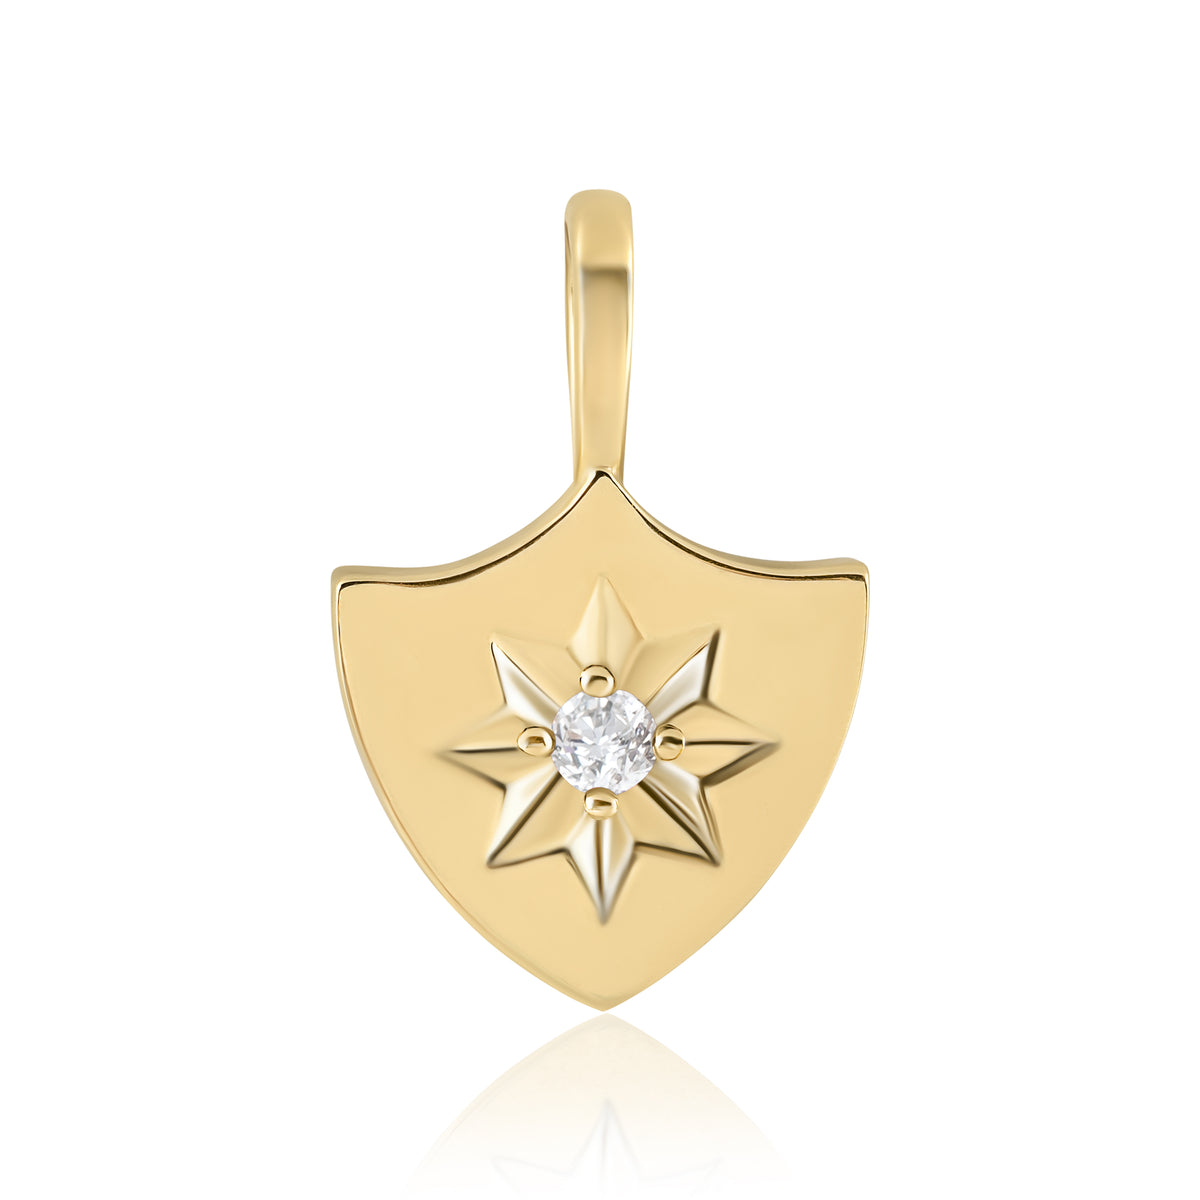 DIAMOND LUCKY STAR SHIELD - YELLOW GOLD